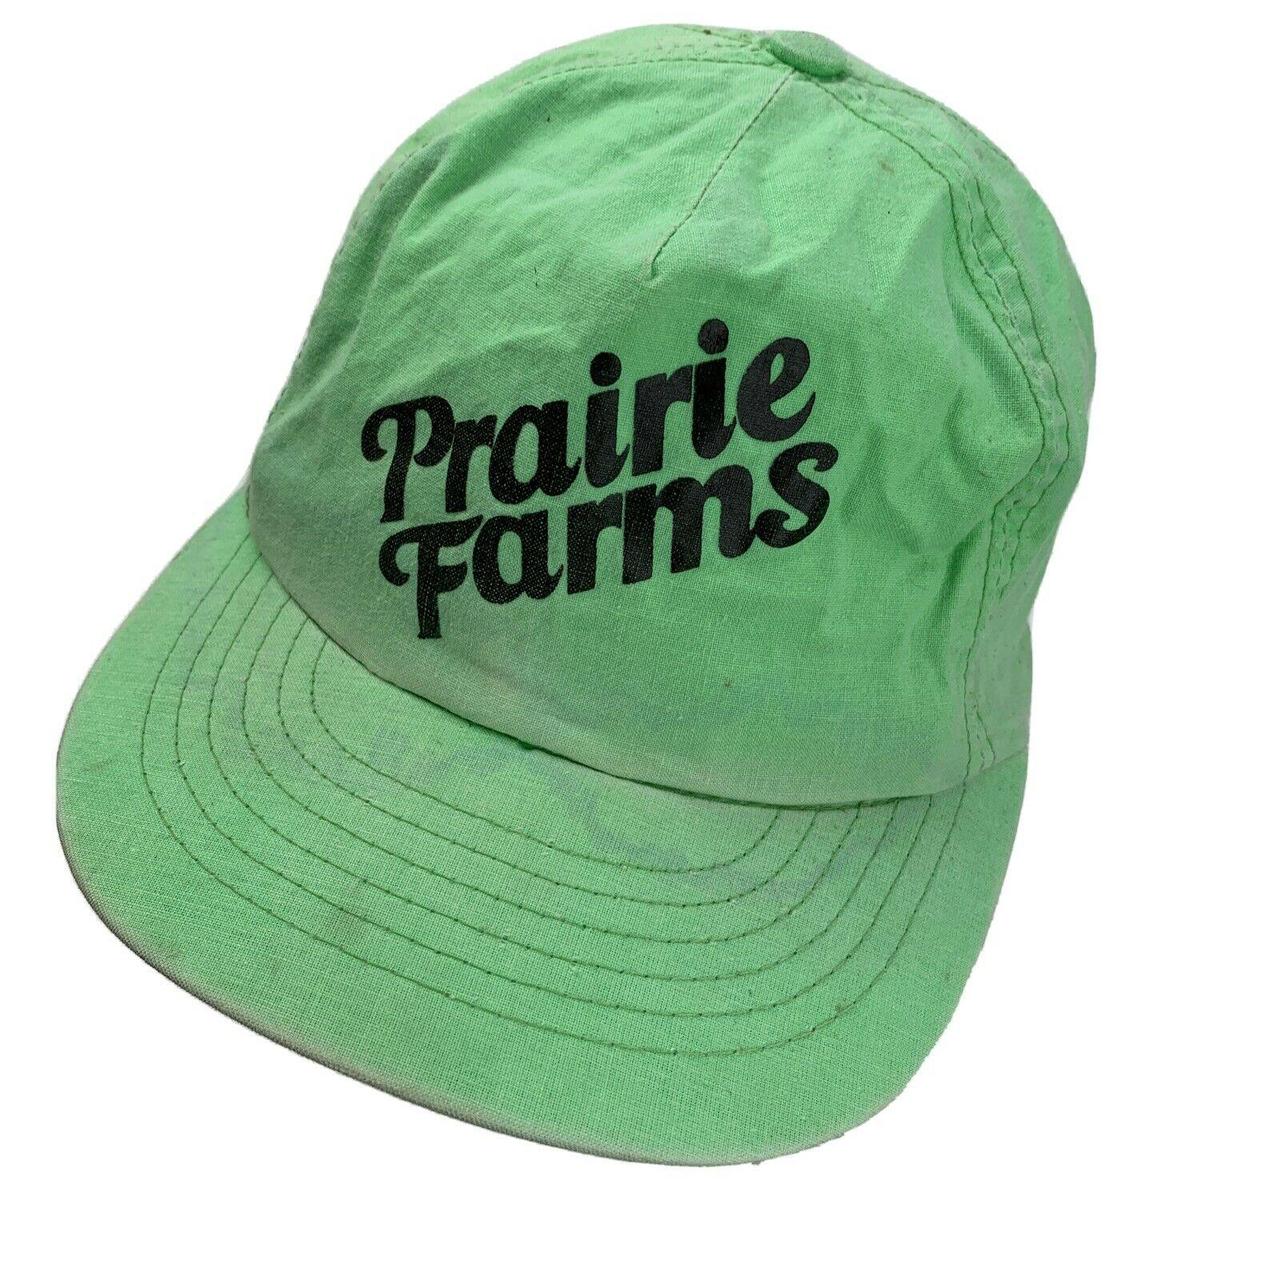 La Prairie Men's Hat